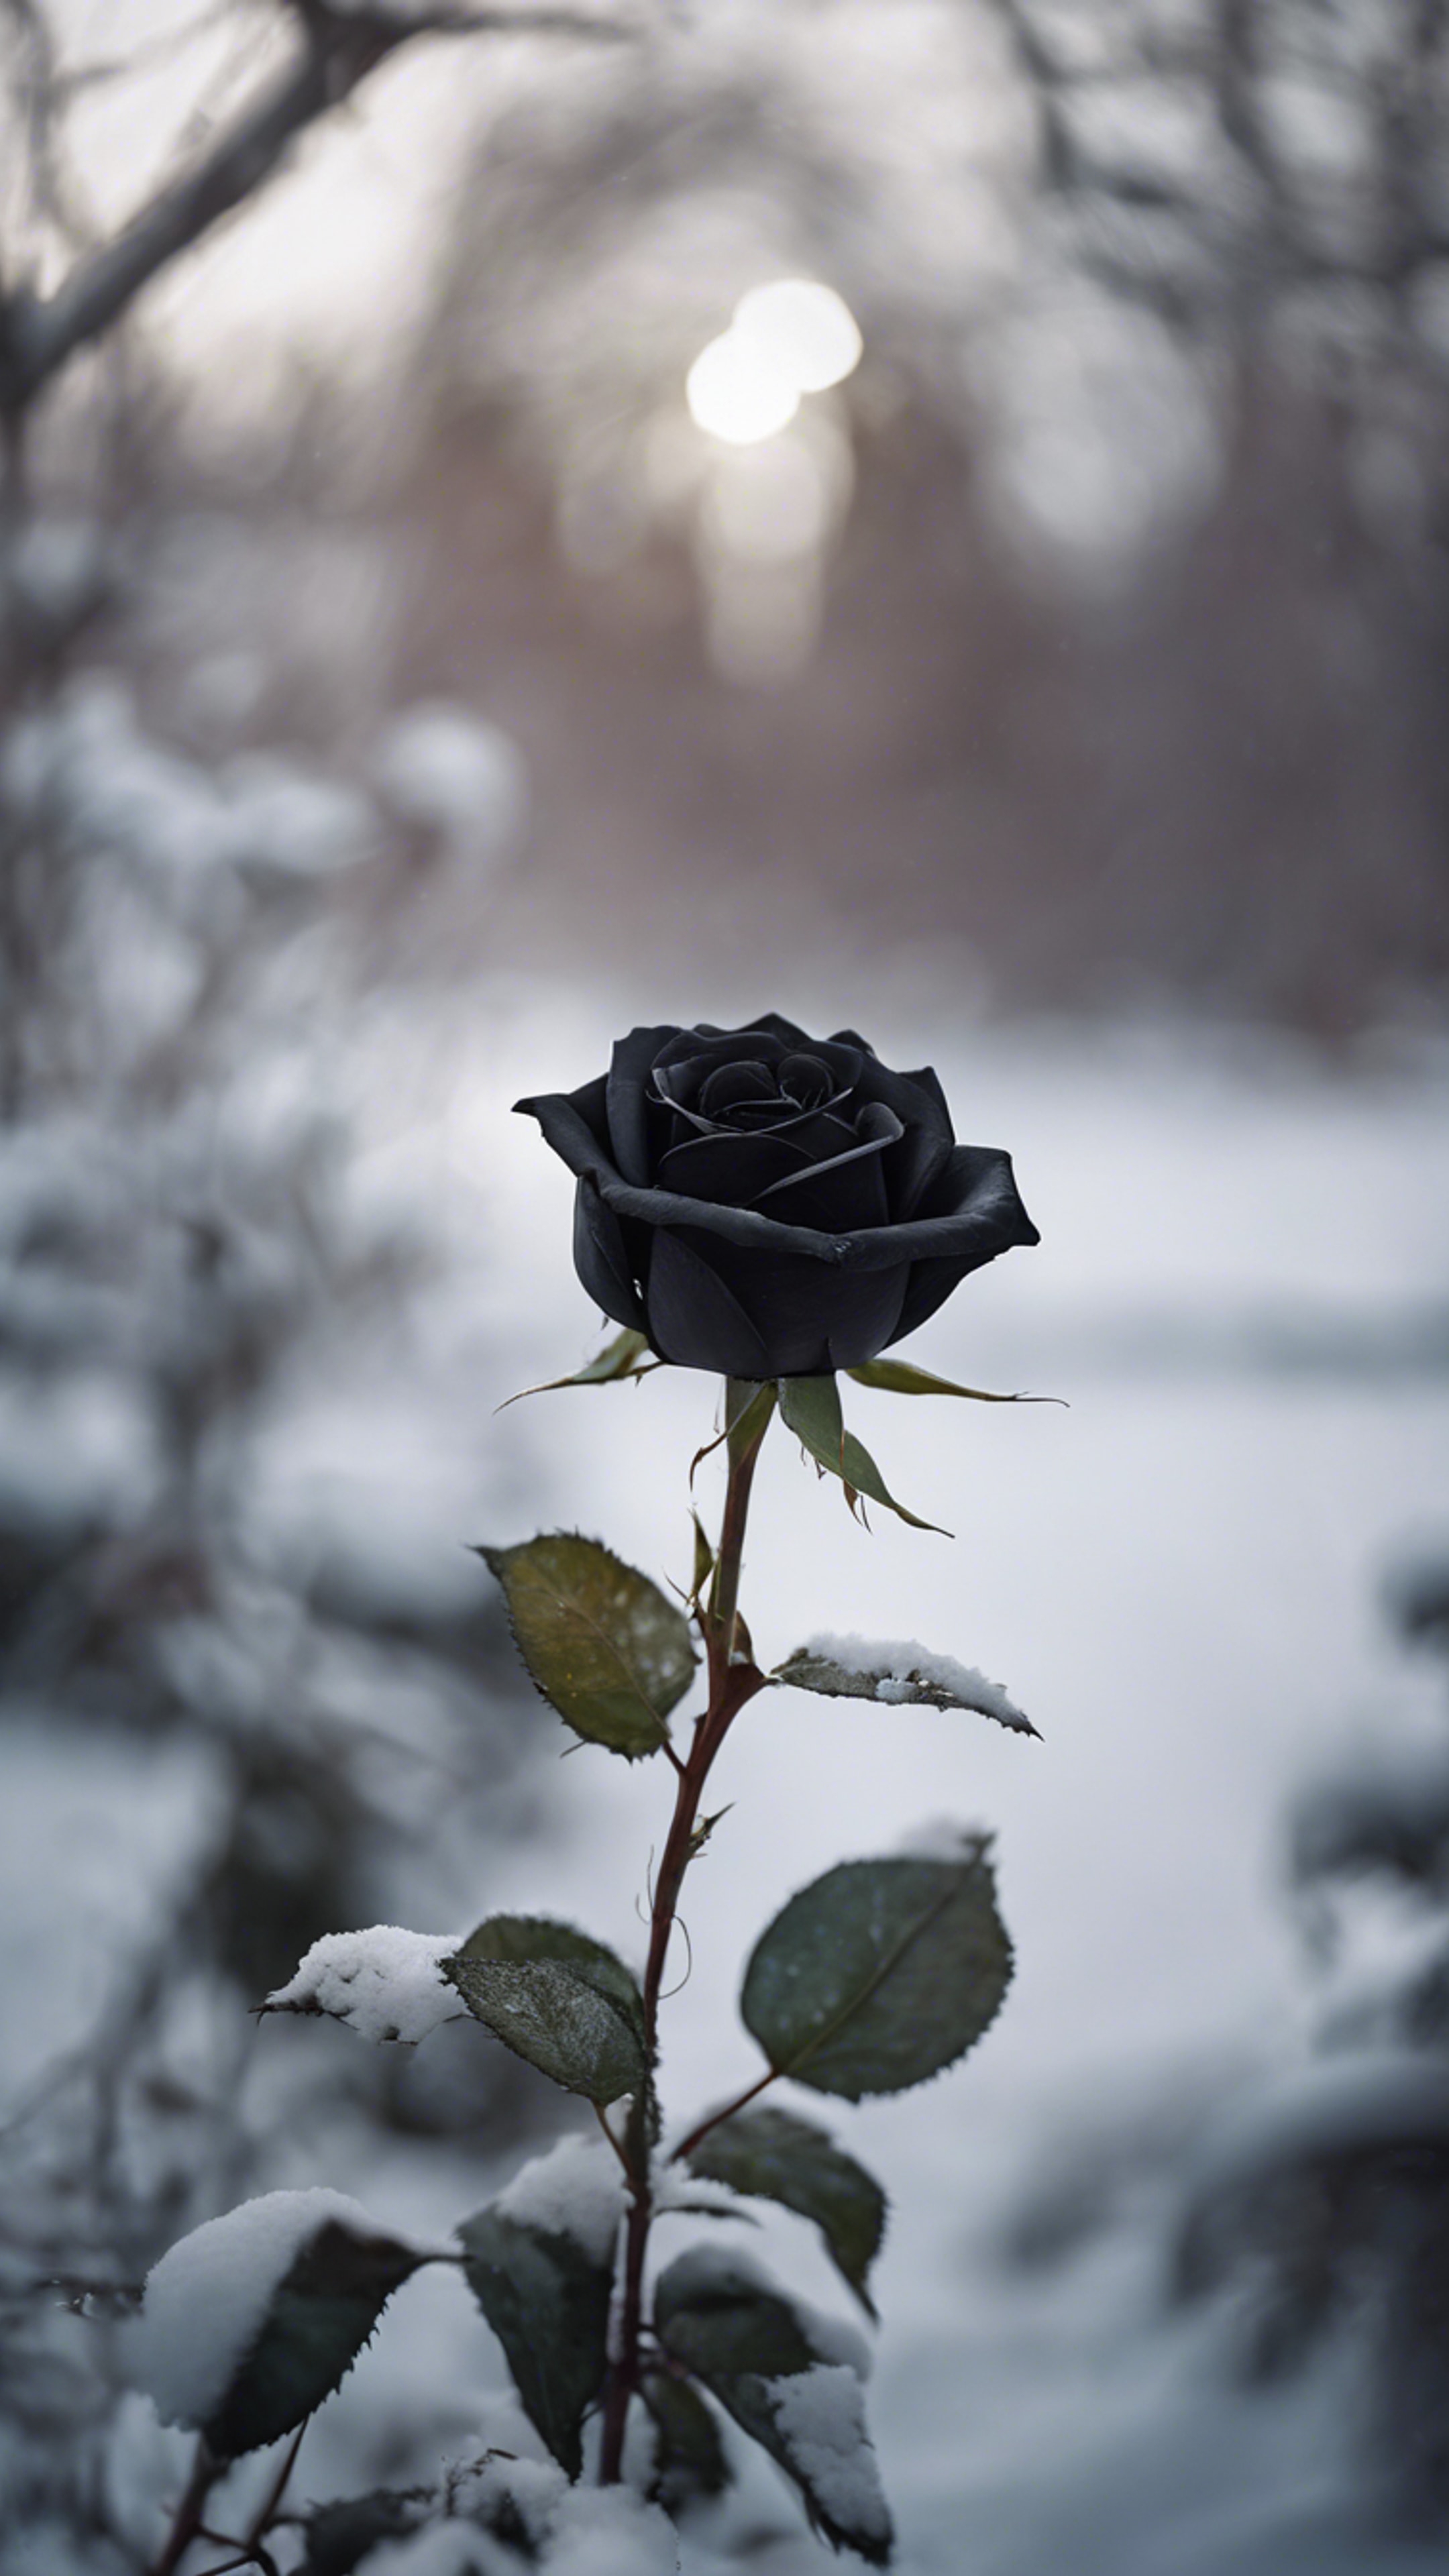 A single, dramatic black rose blooming against the stark backdrop of a snow-covered garden. Papel de parede[12d80e94a68945fa833e]